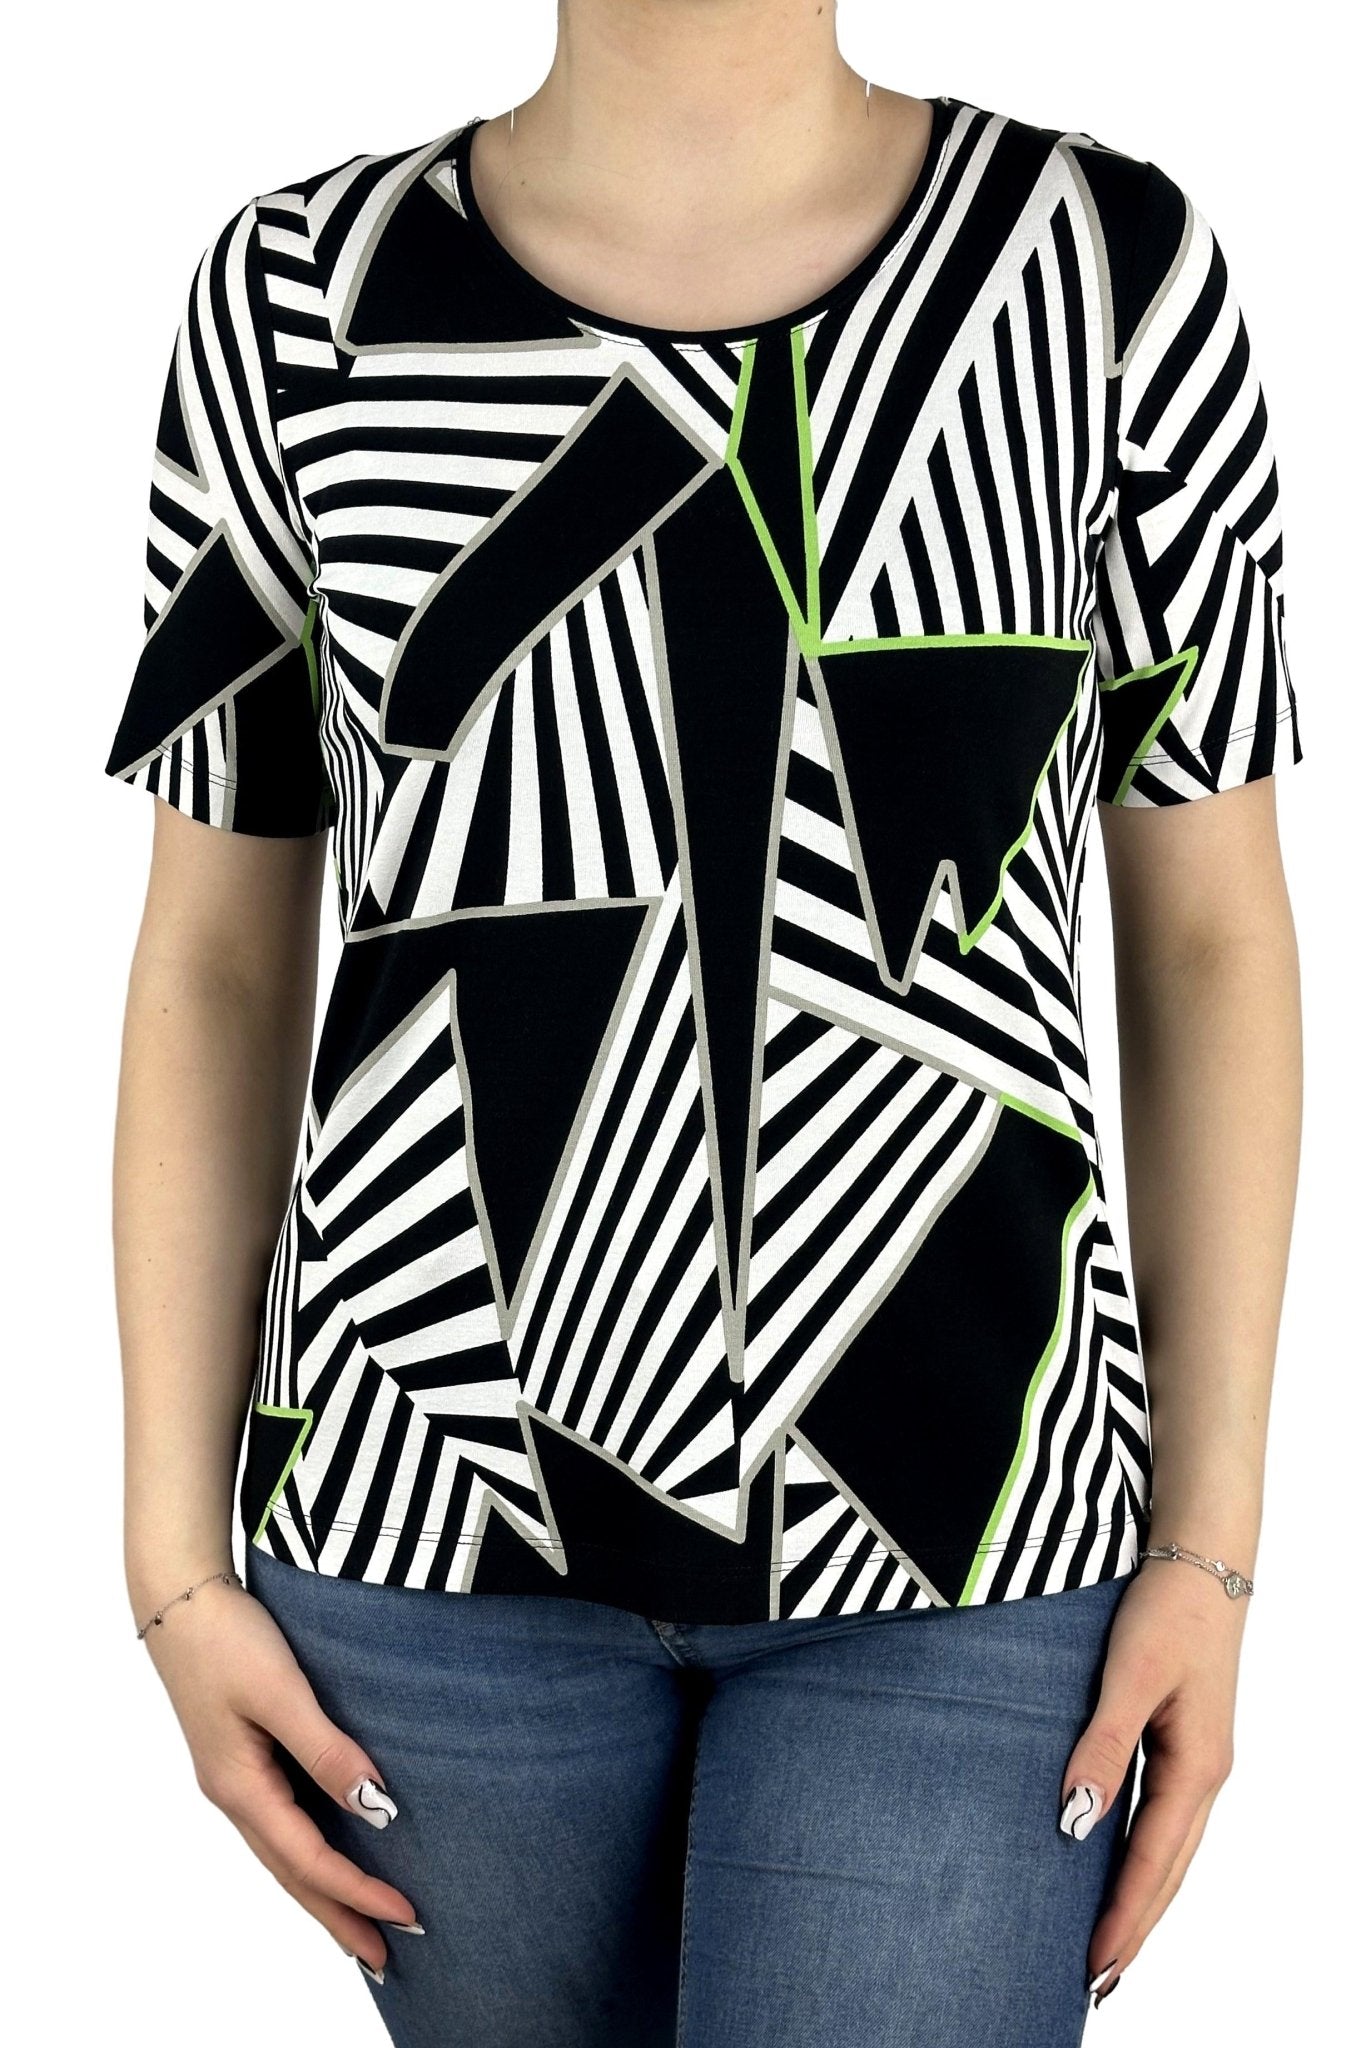 Sommermann Shirt 5519-31. Mode von Sommermann